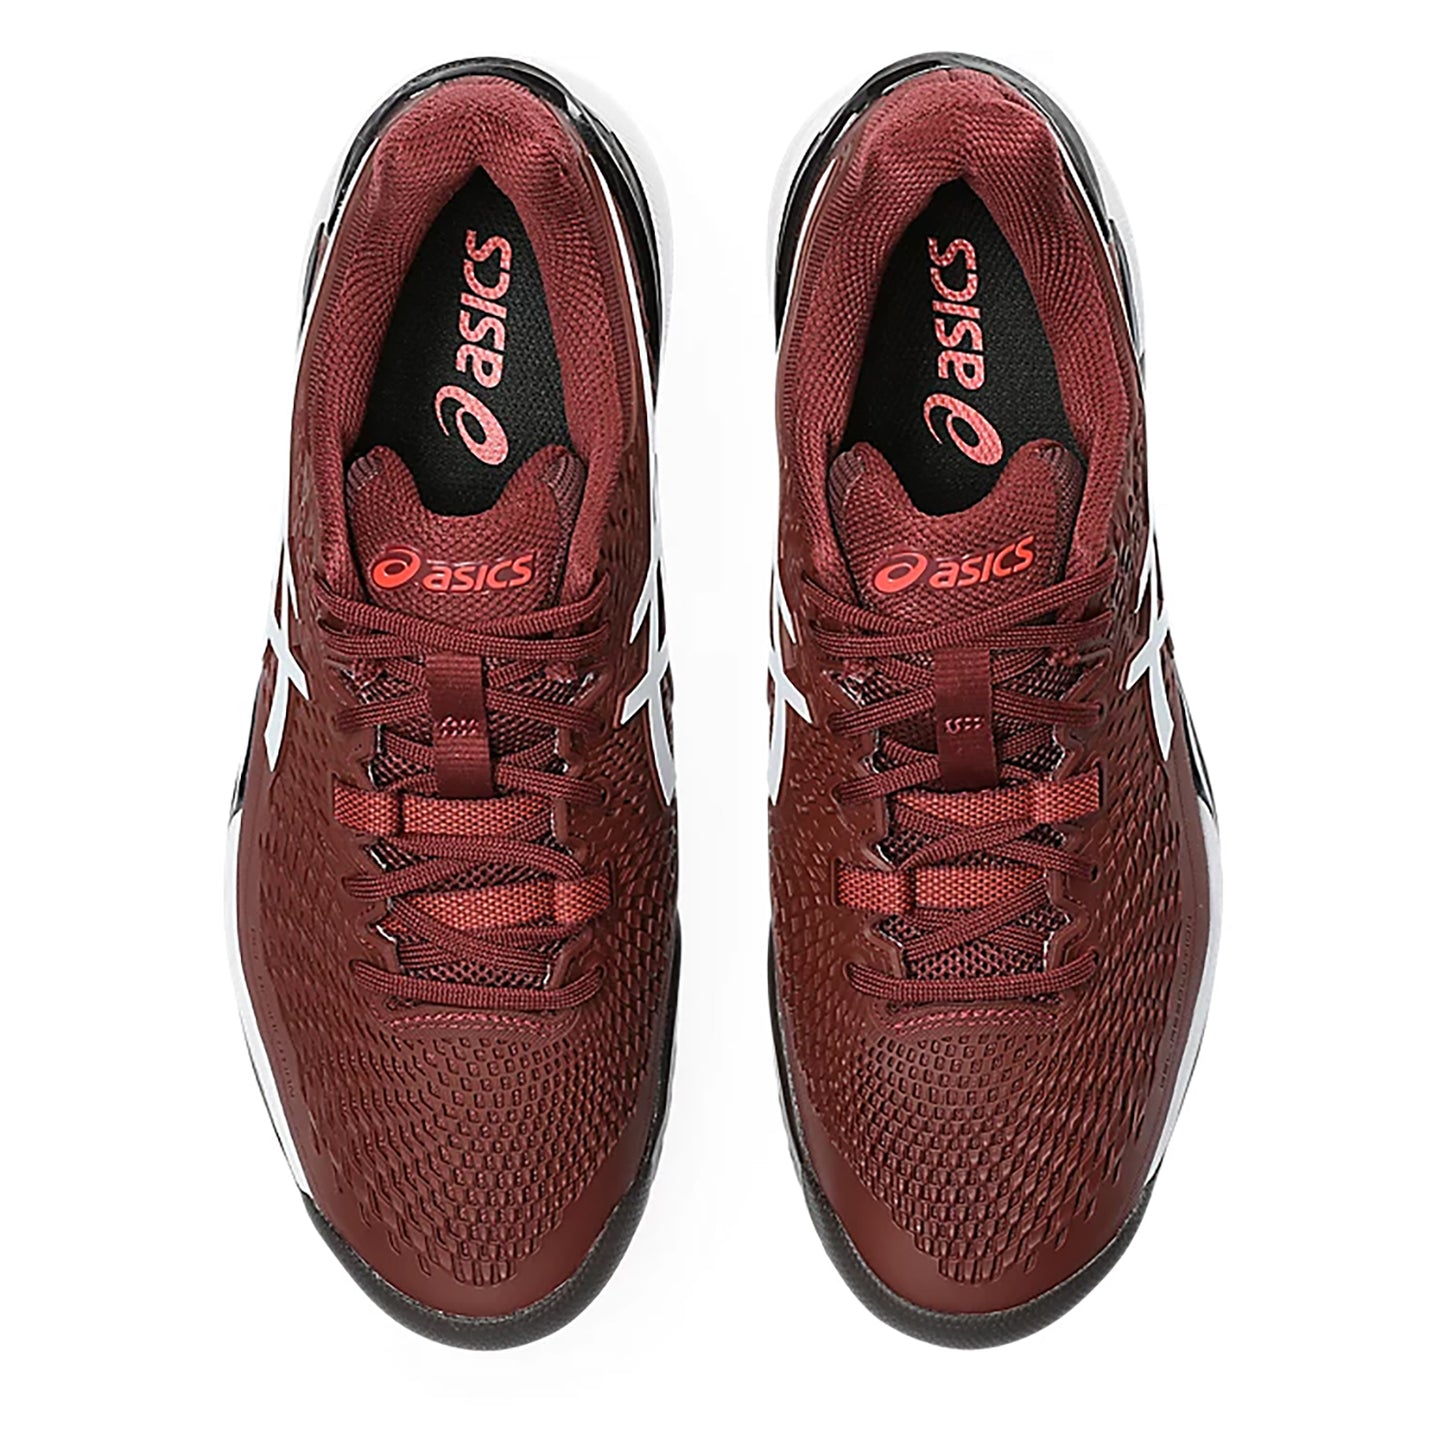 Asics Gel-Resolution 9 Men's Tennis Shoes - Best Price online Prokicksports.com